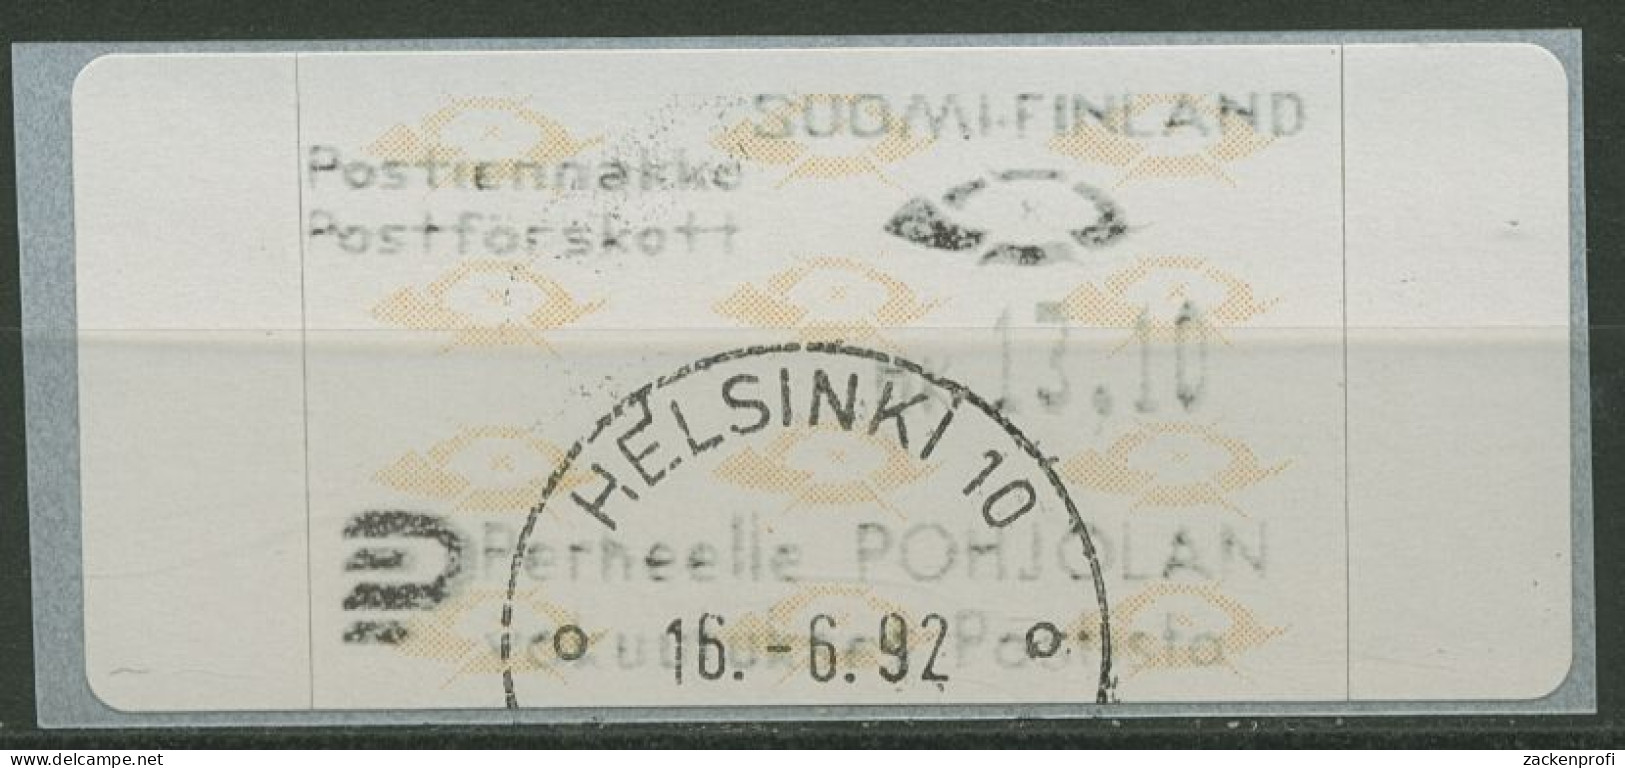 Finnland Automatenmarken 1992 Posthörner Einzelwert ATM 12.3 Z5 Gestempelt - Viñetas De Franqueo [ATM]